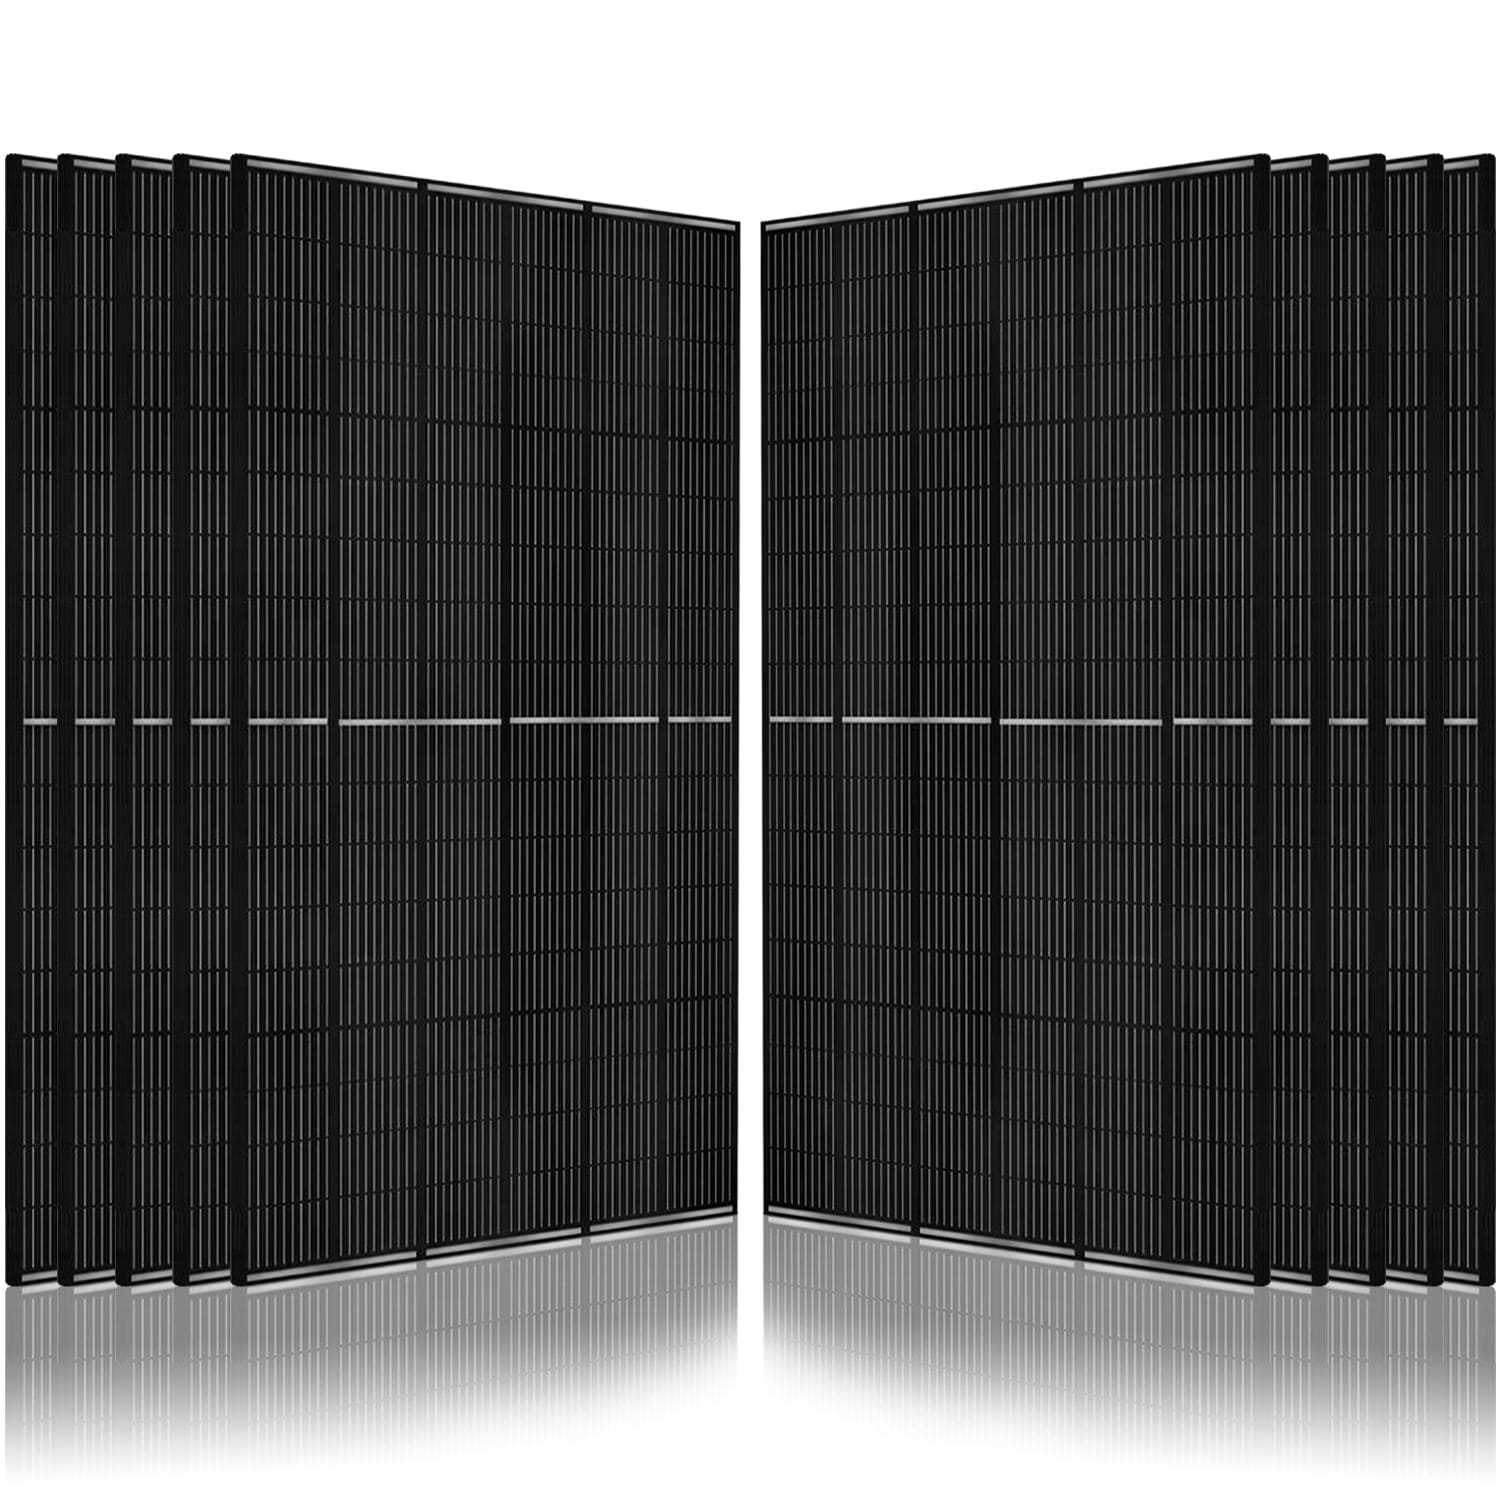 410 Watt Monocrystalline Solar Panel (10 Pack)